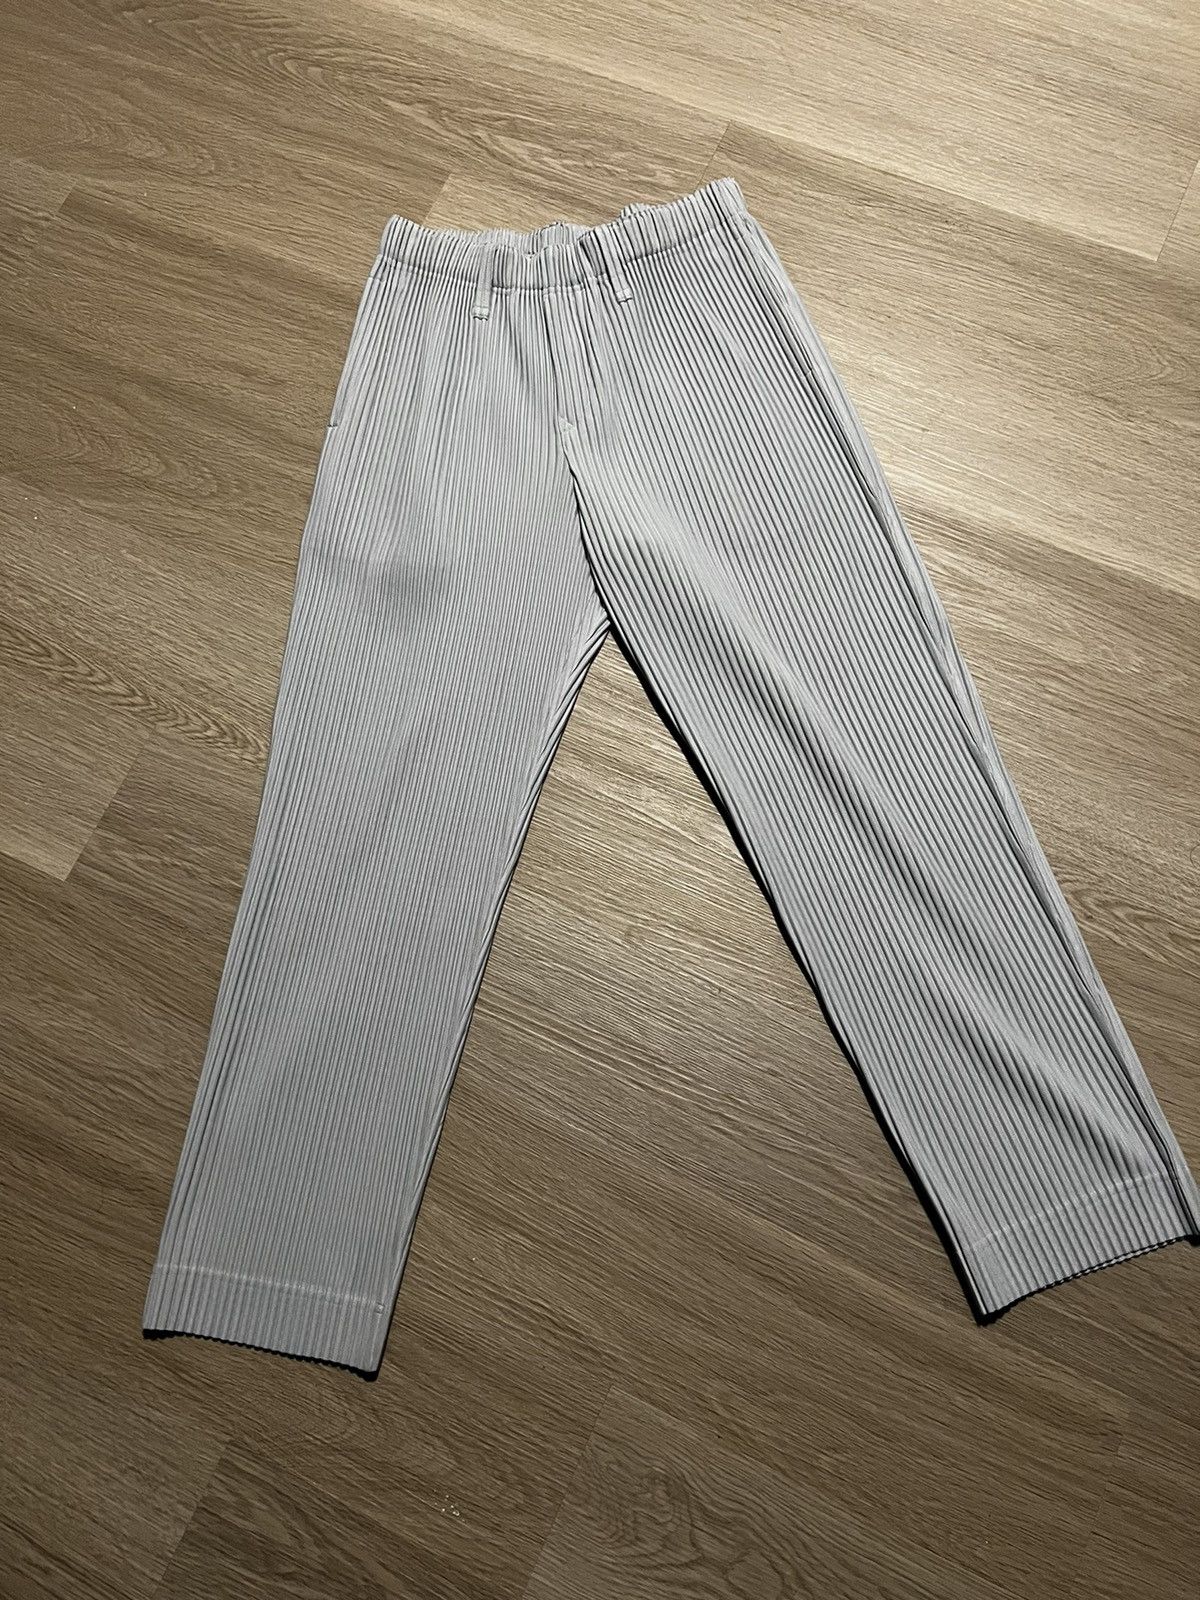 Issey Miyake Issey Miyake Pleated Trousers Size US 30 / EU 46 - 4 Thumbnail